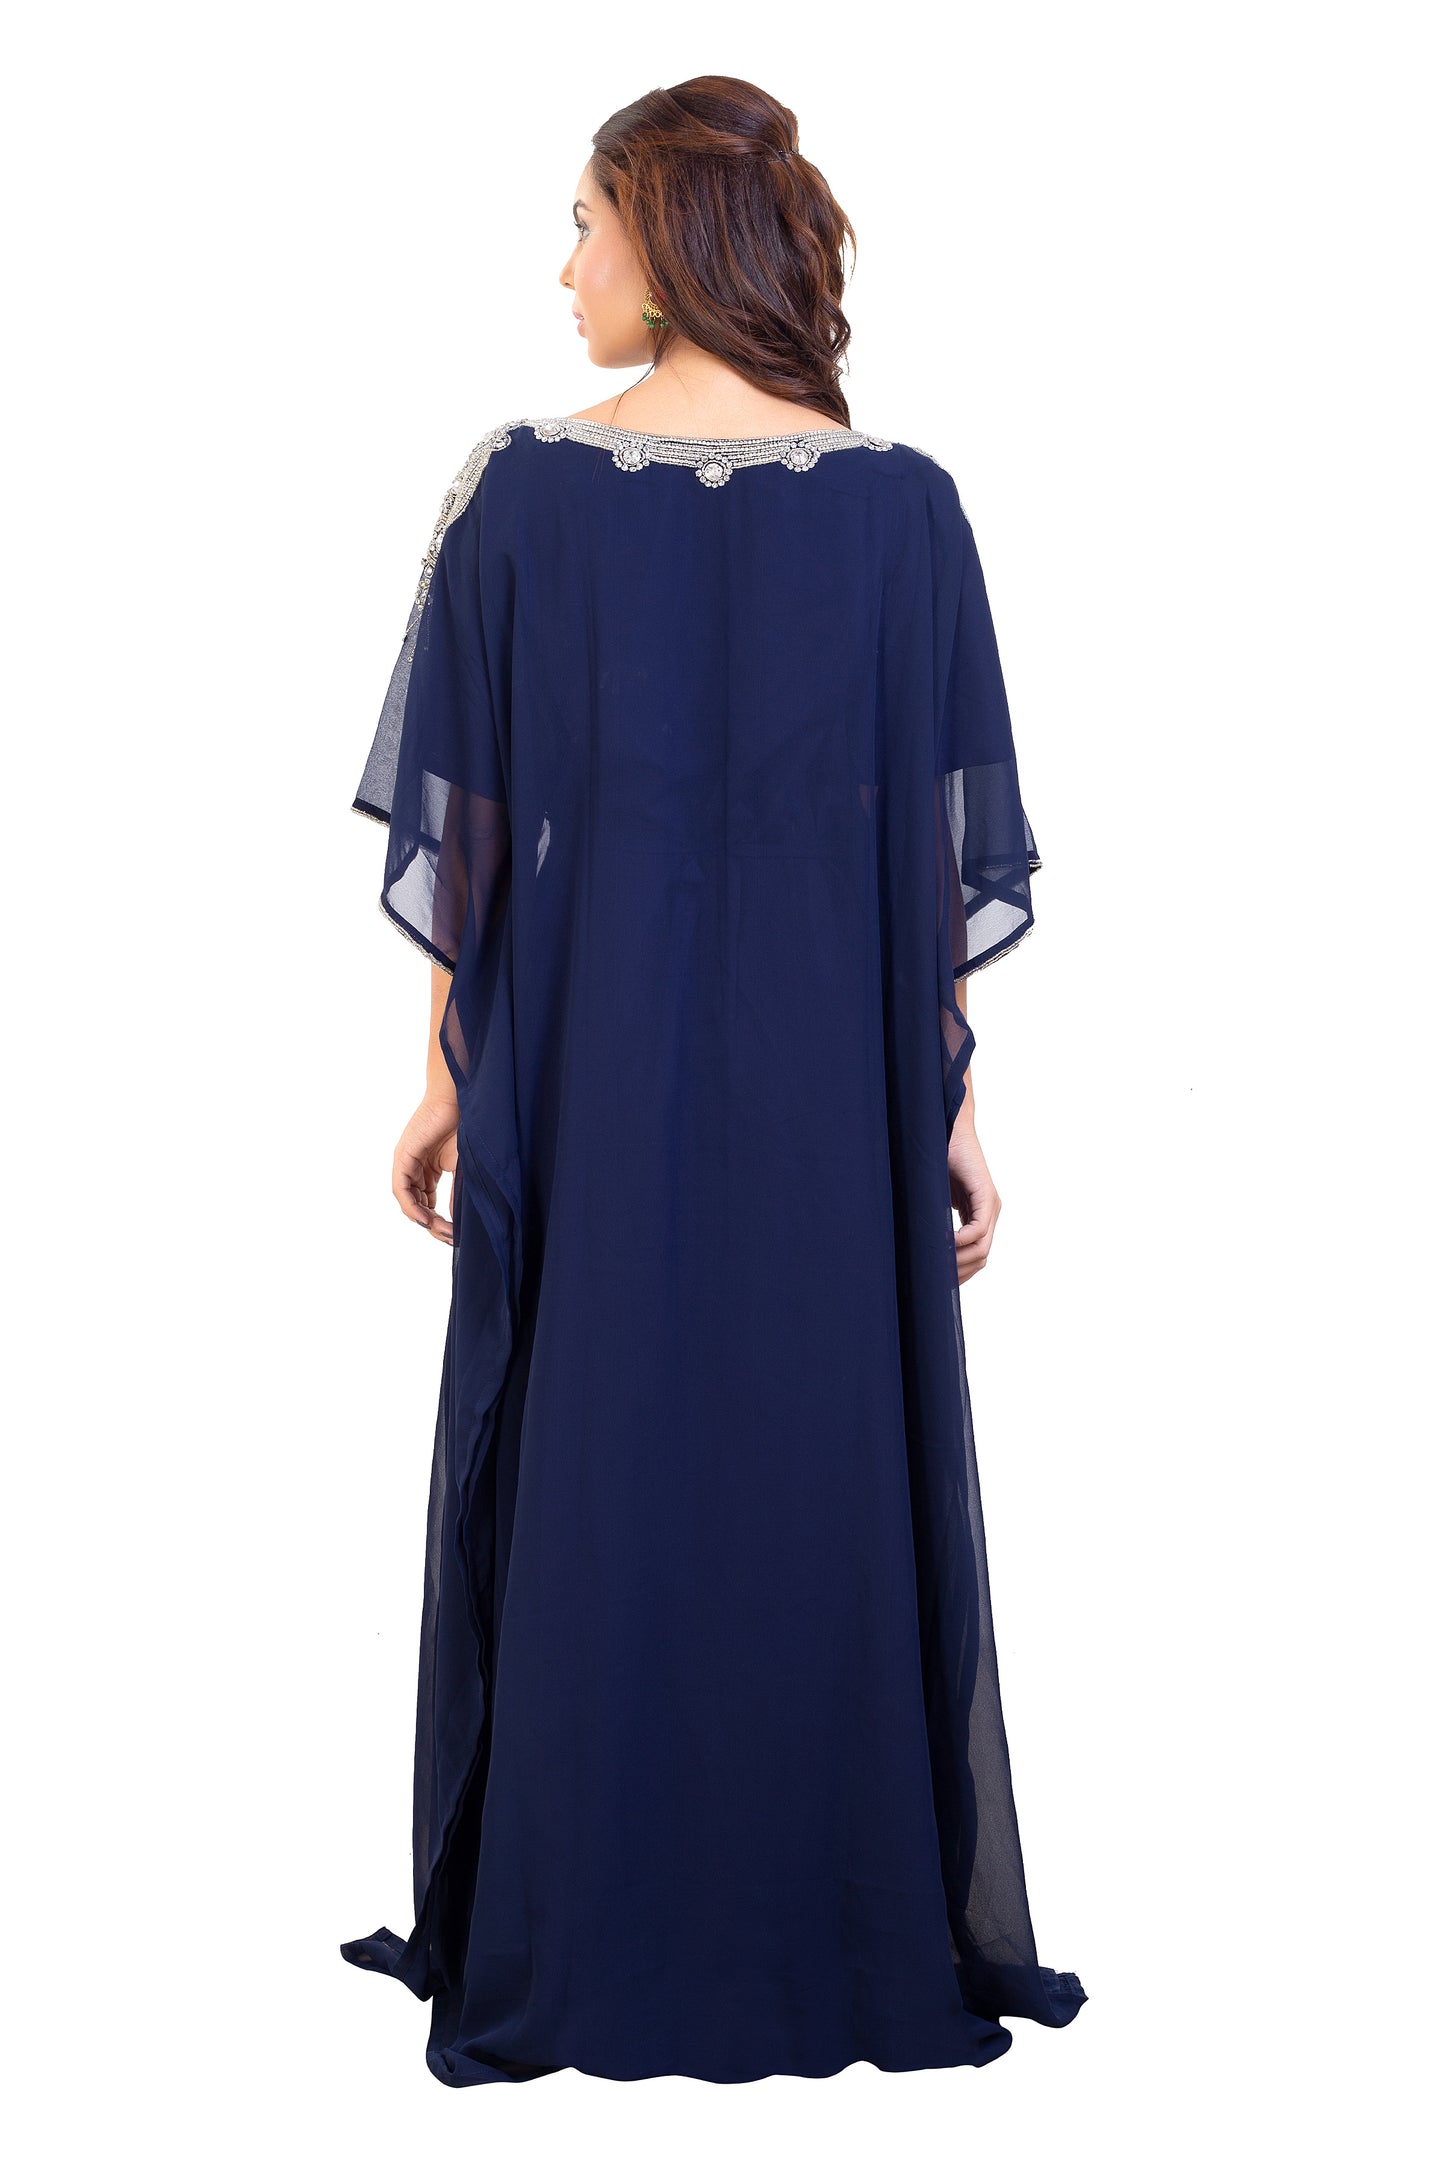 Poncho Dress Navy Blue Long Maxi Gown - Maxim Creation